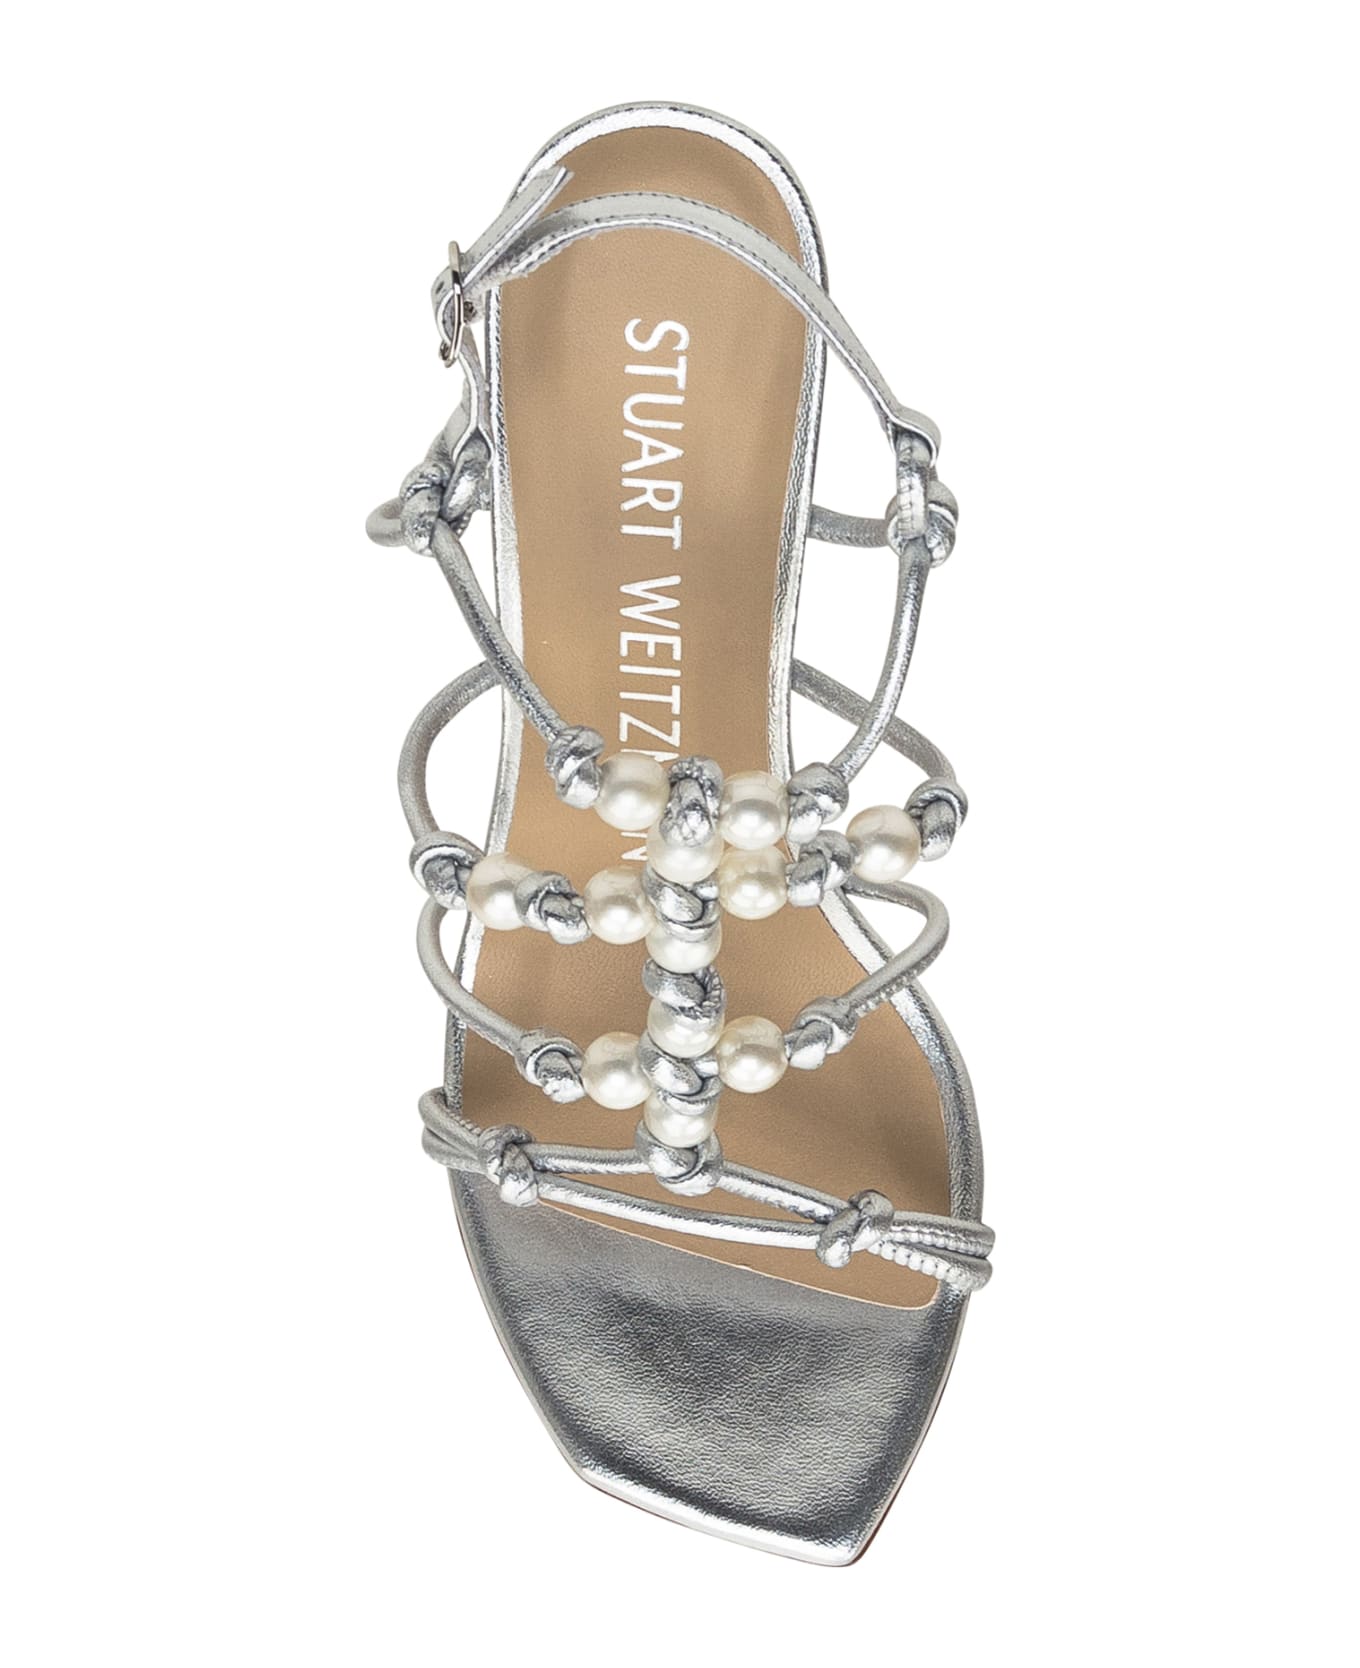 Stuart Weitzman Sandal With Pearls - ARGENTO サンダル